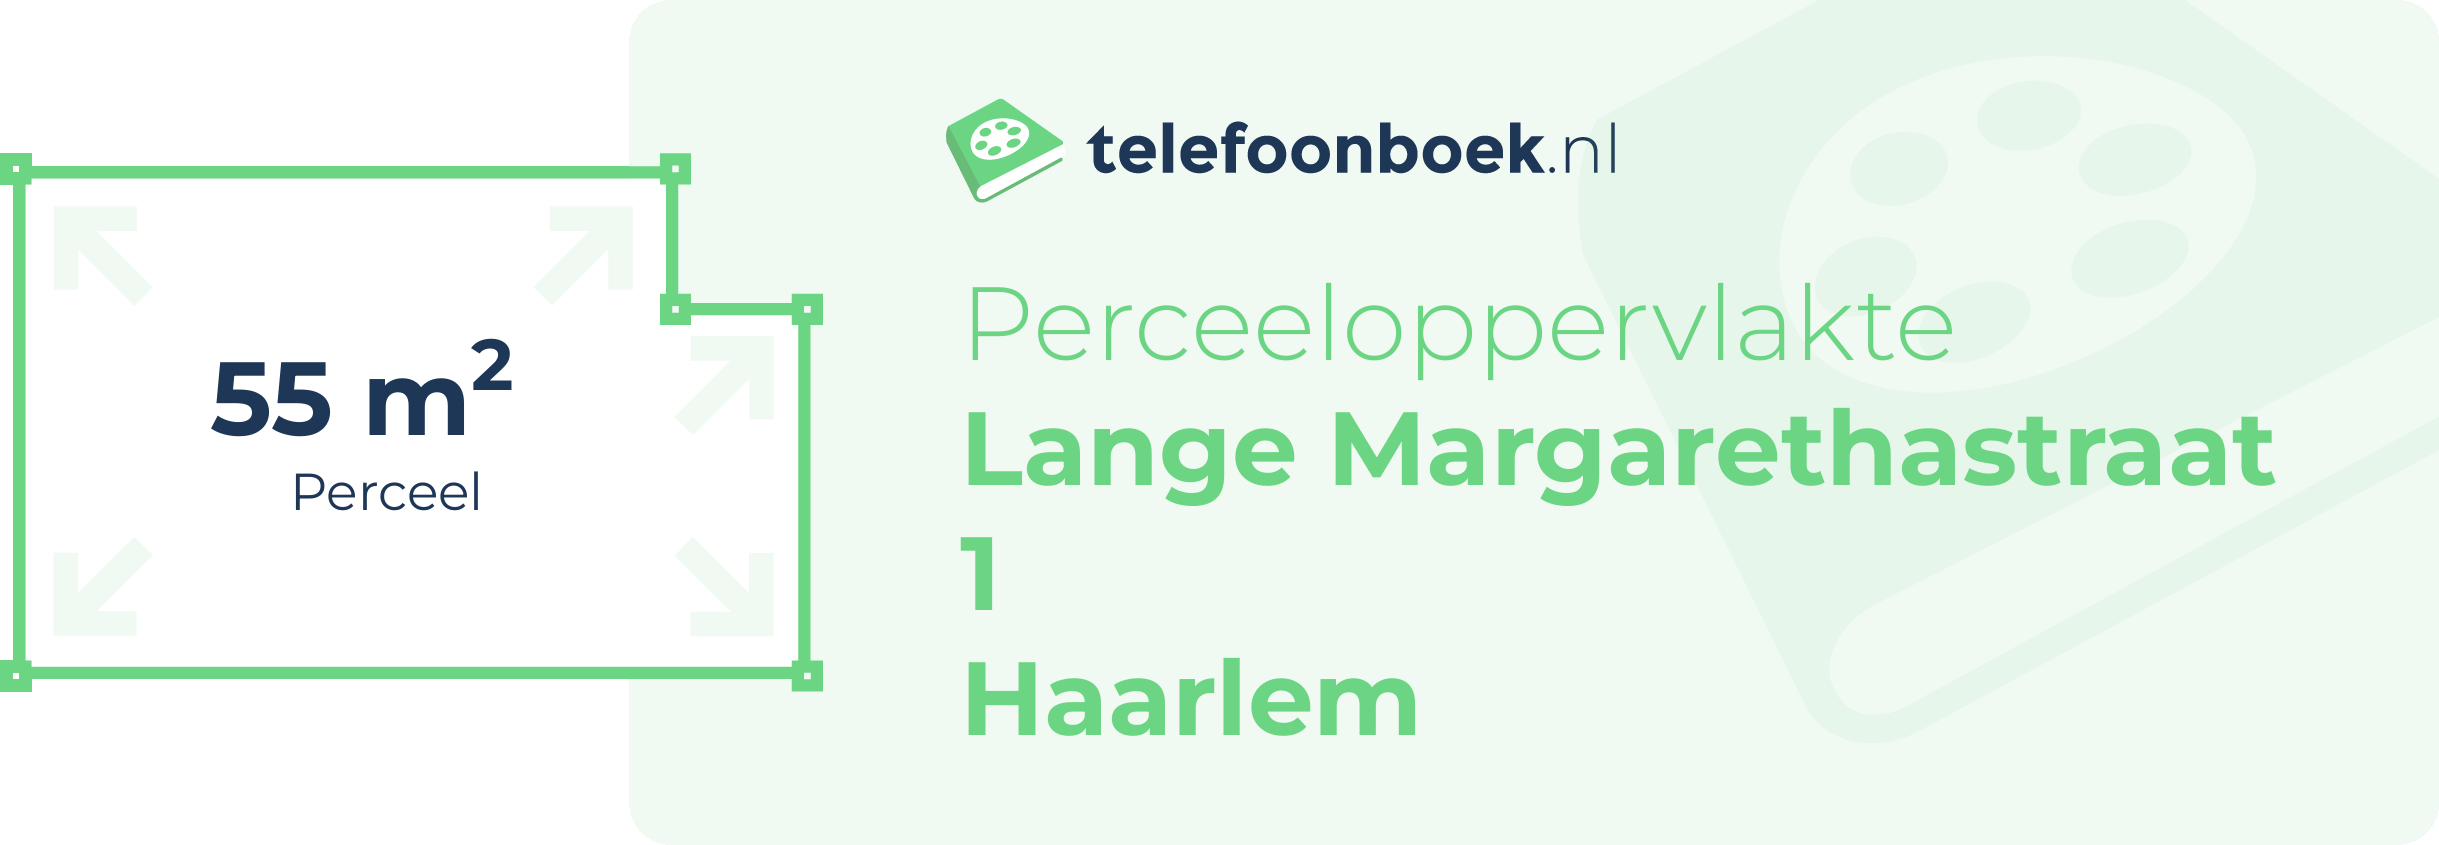 Perceeloppervlakte Lange Margarethastraat 1 Haarlem